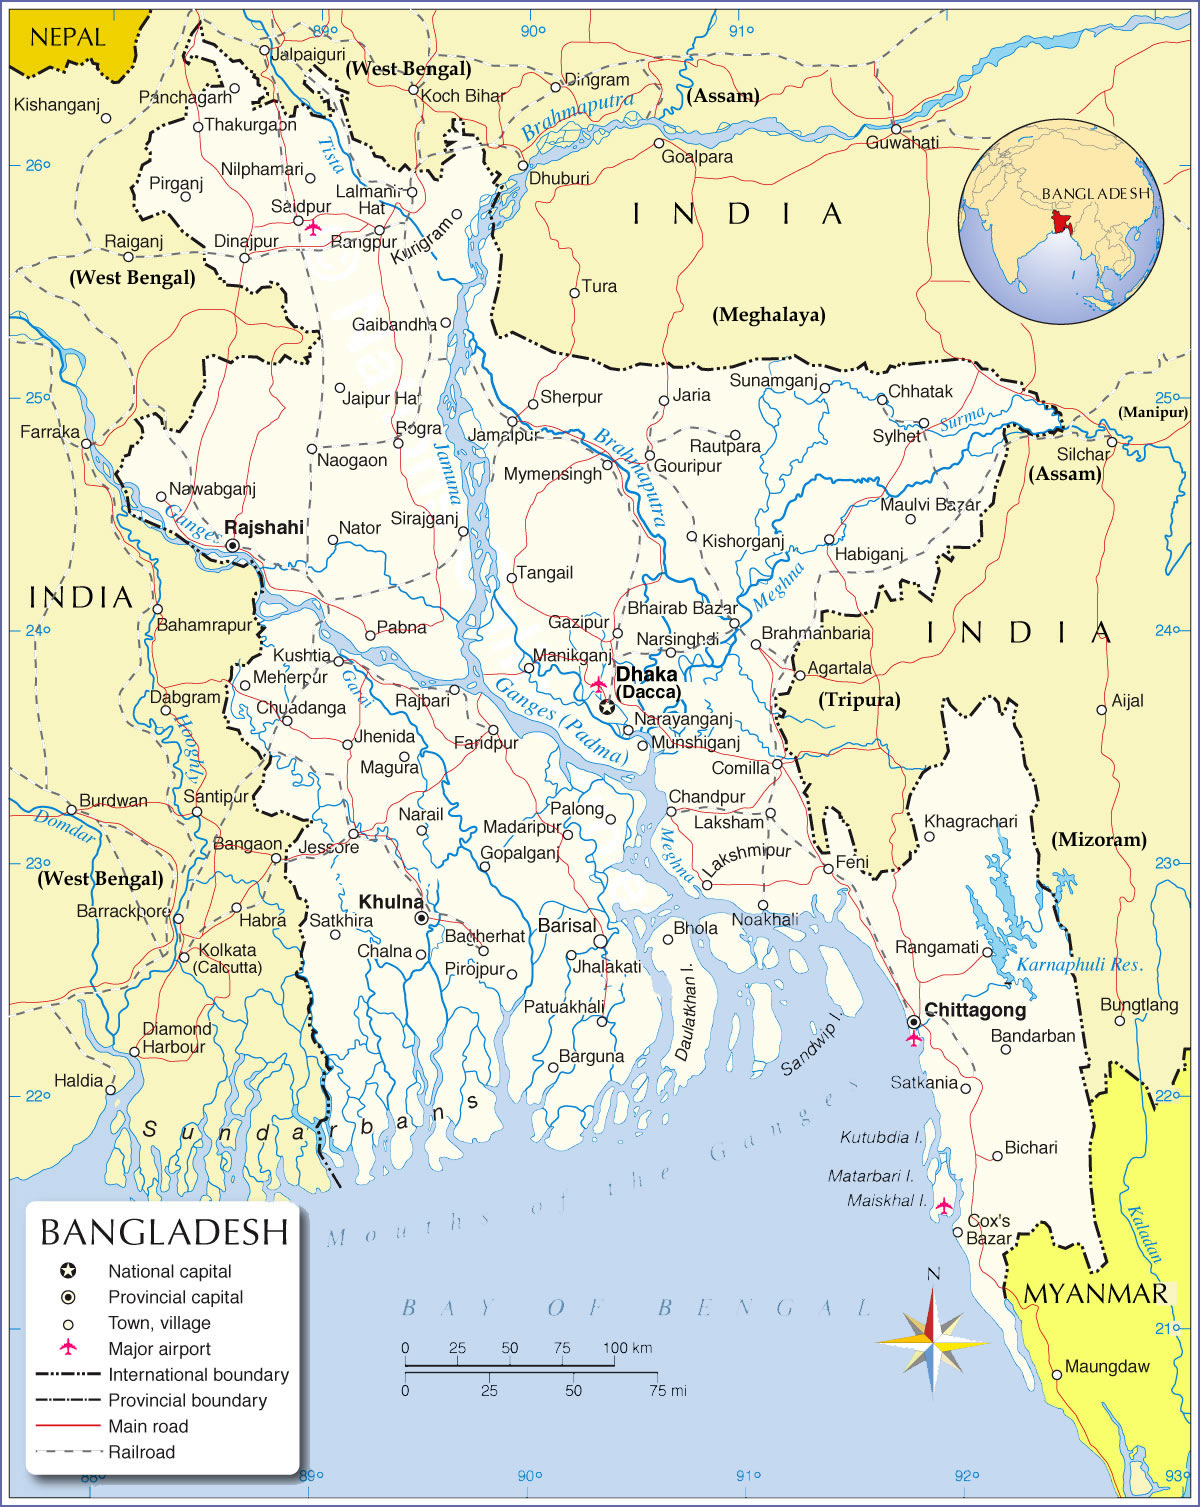 Bangladesh Development Studies: Country Profile of Bangladesh